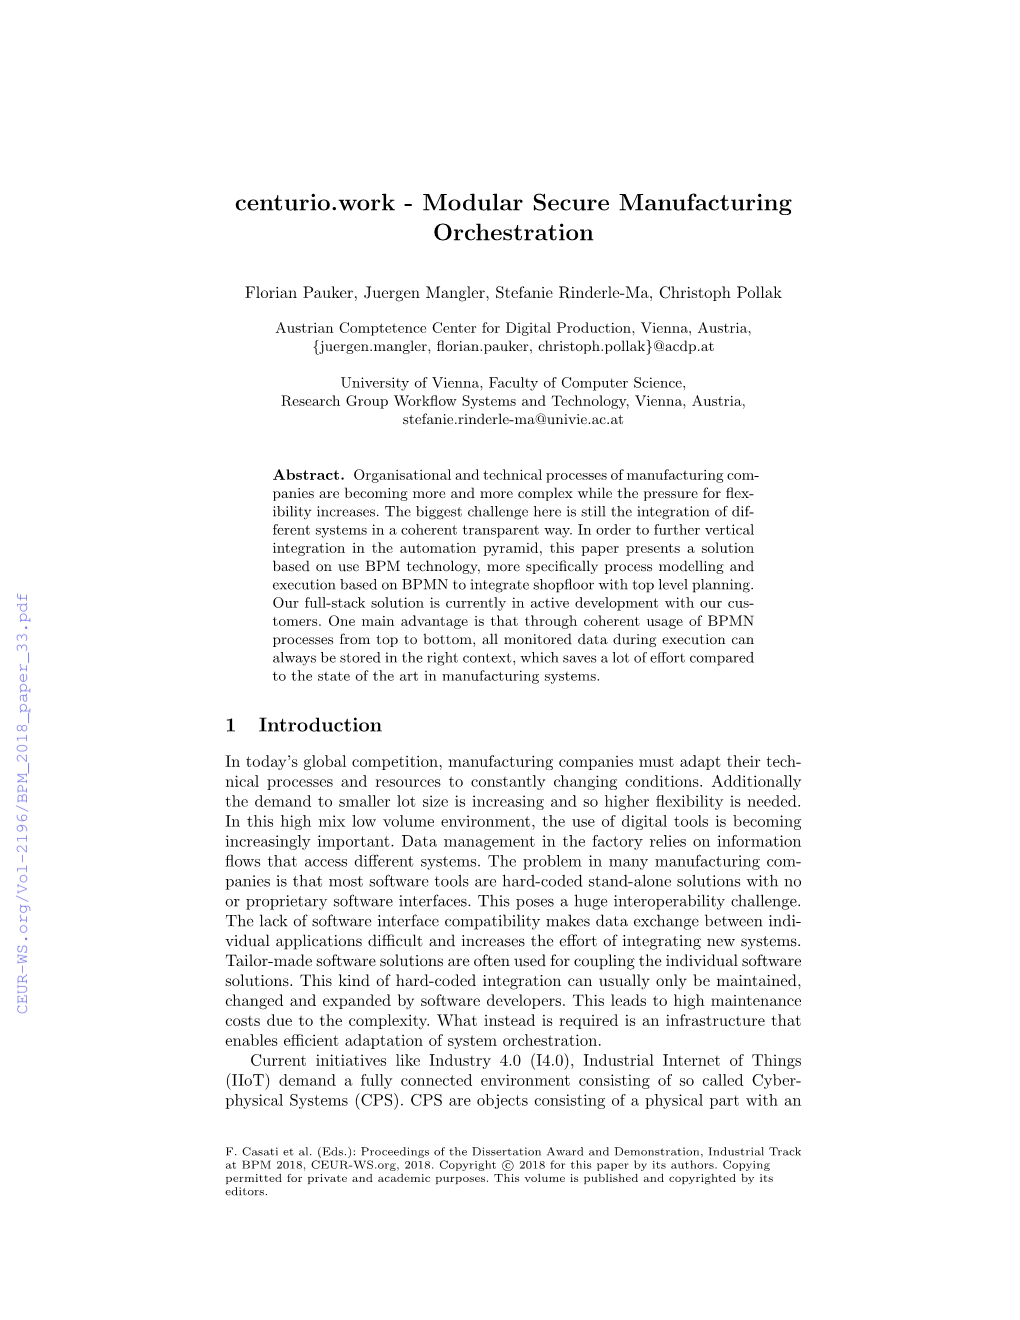 Centurio.Work - Modular Secure Manufacturing Orchestration